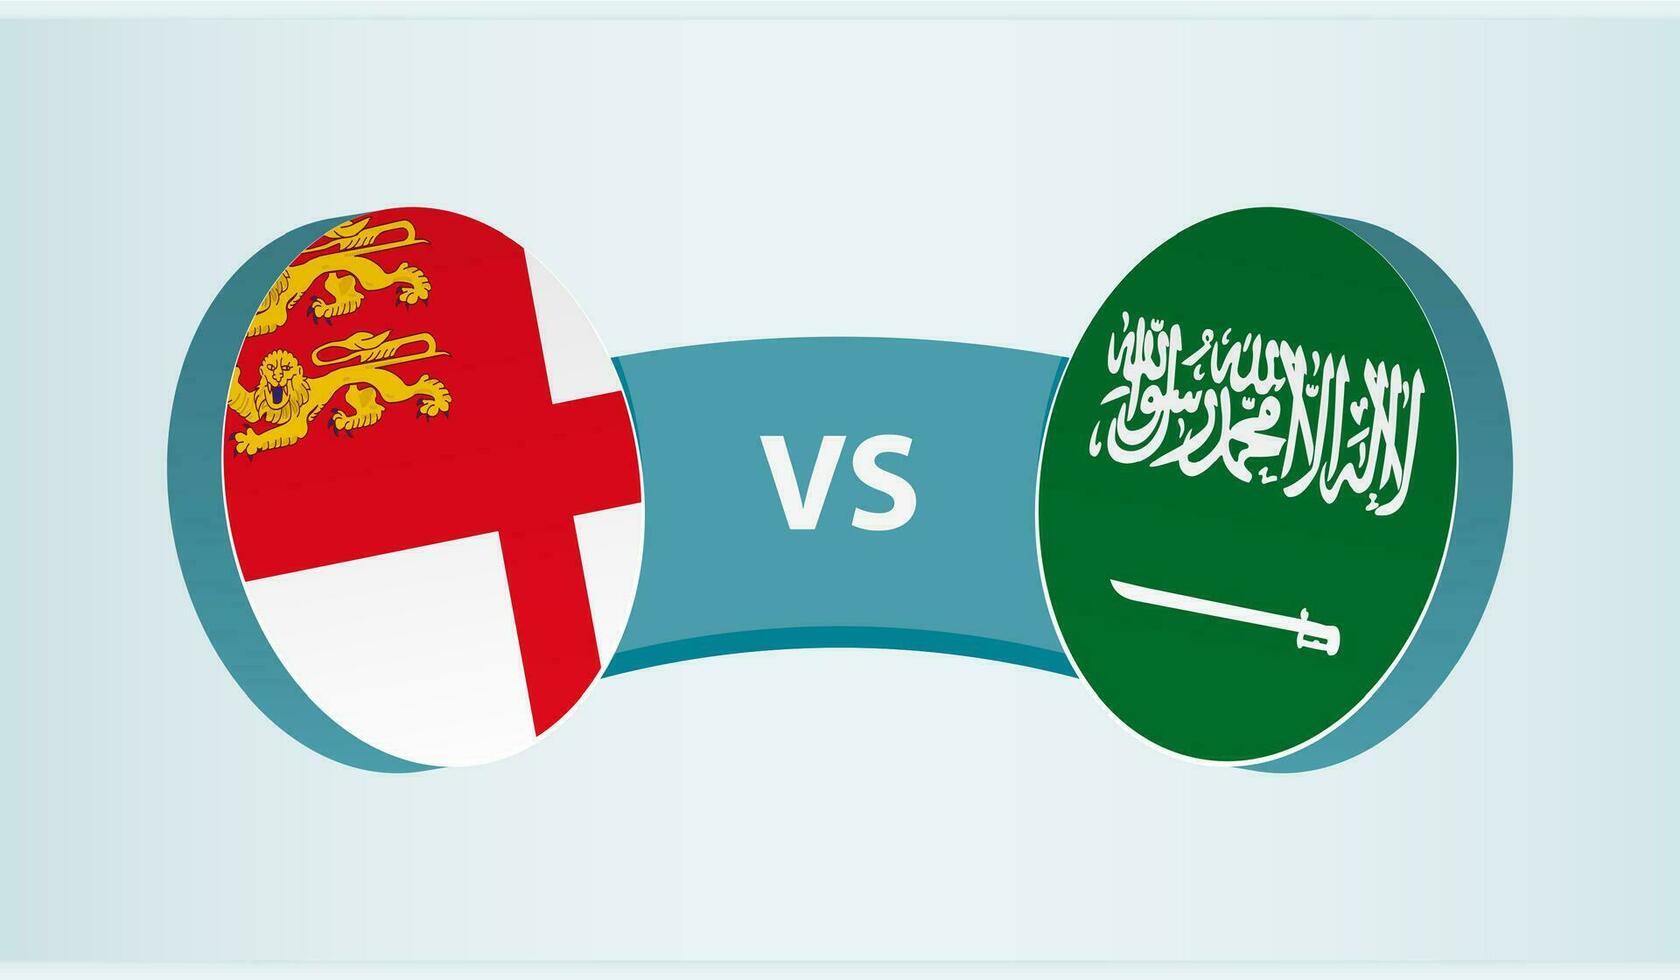 sark mot saudi Arabien, team sporter konkurrens begrepp. vektor